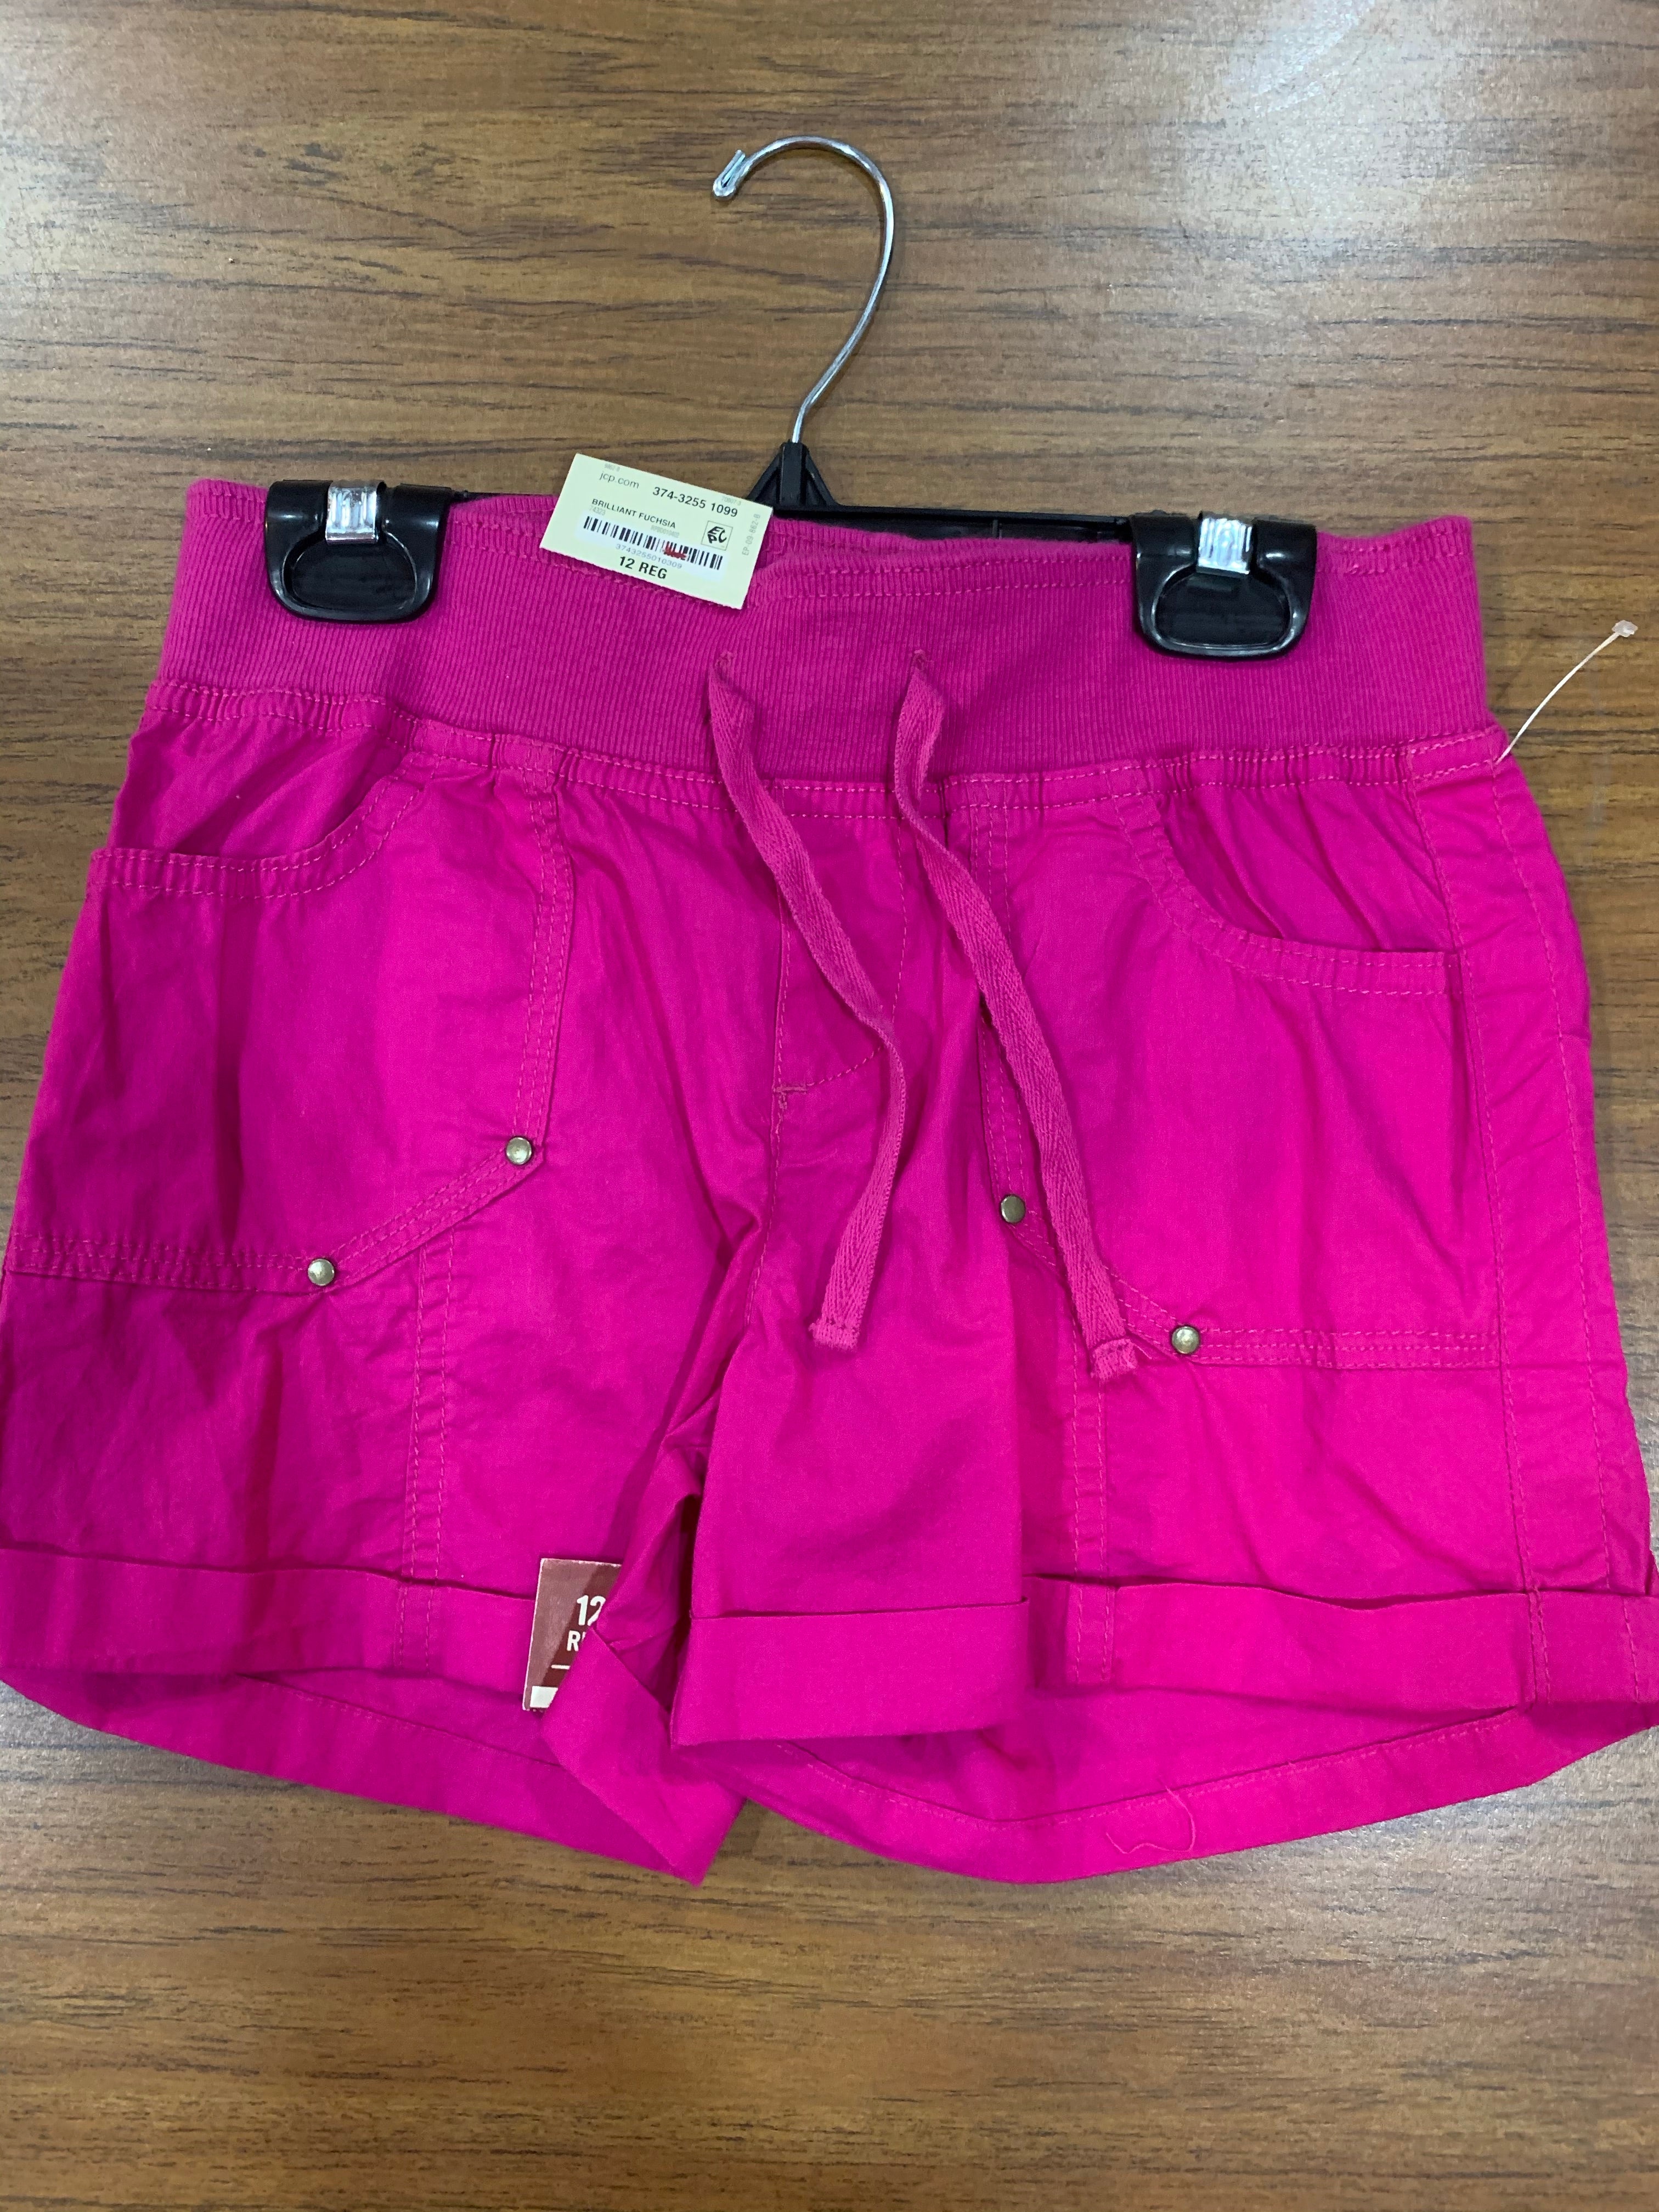 Resale fuchsia shorts size 12